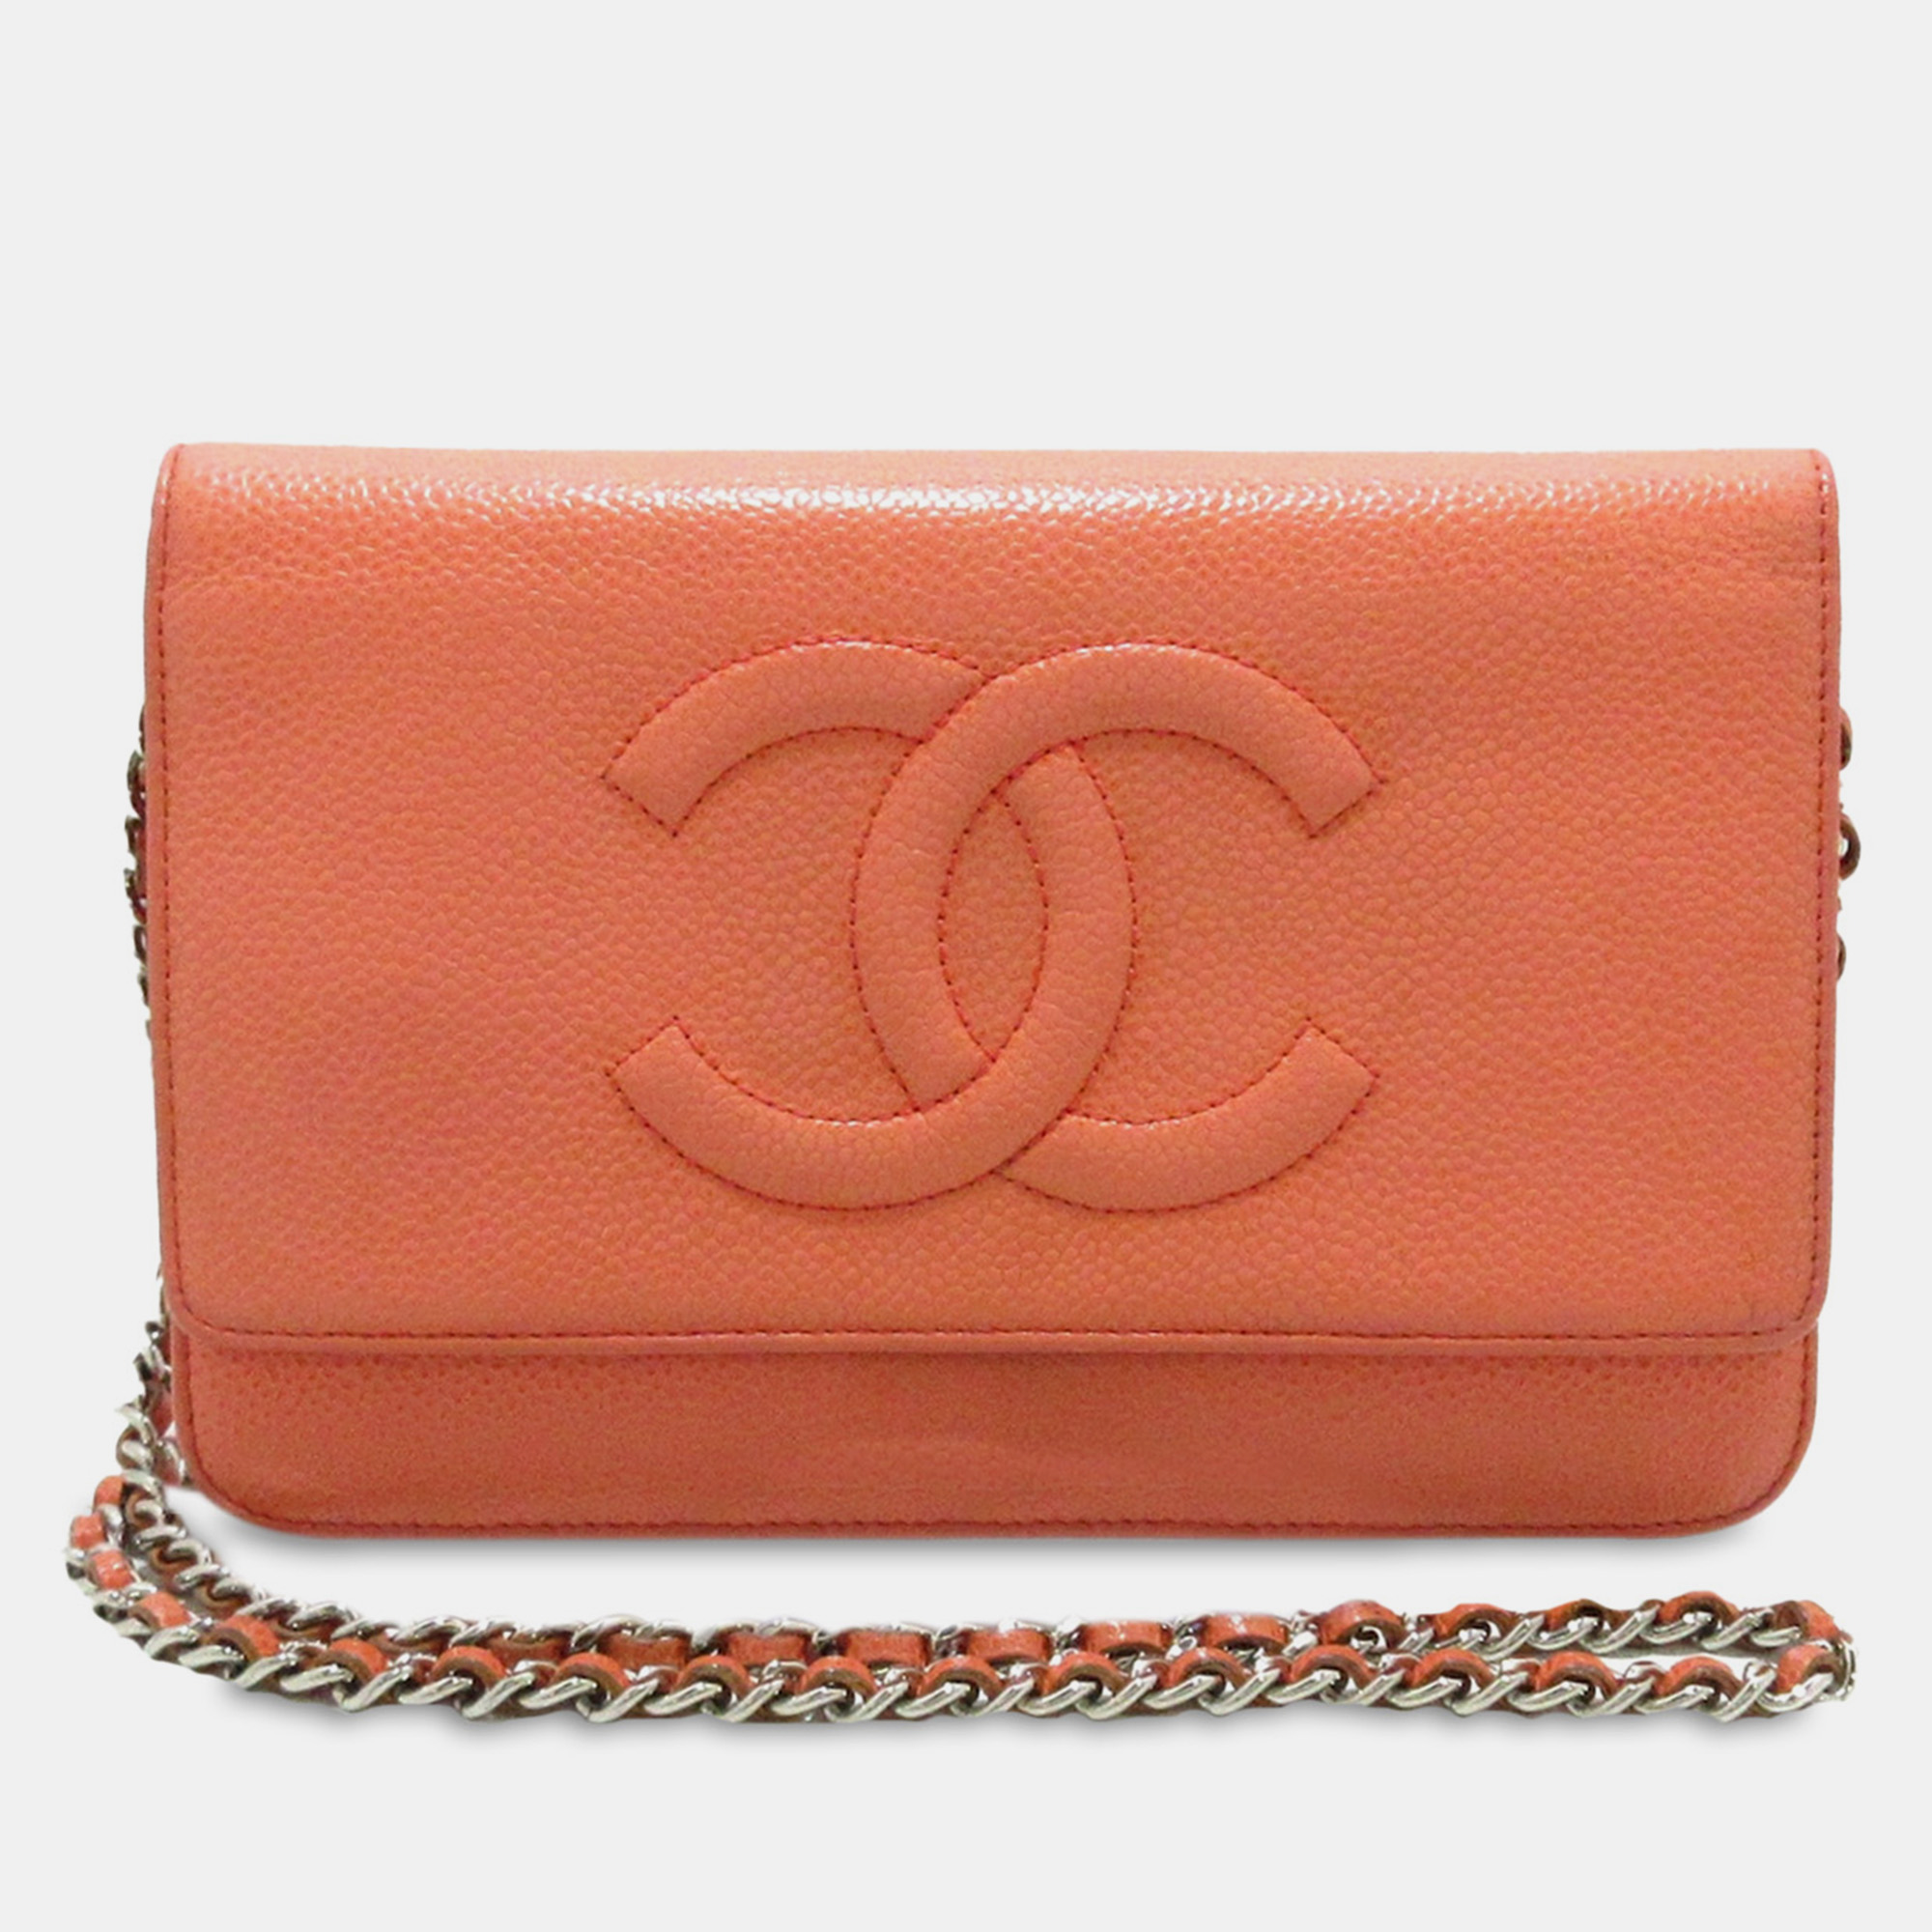 Chanel cc caviar wallet on chain bag